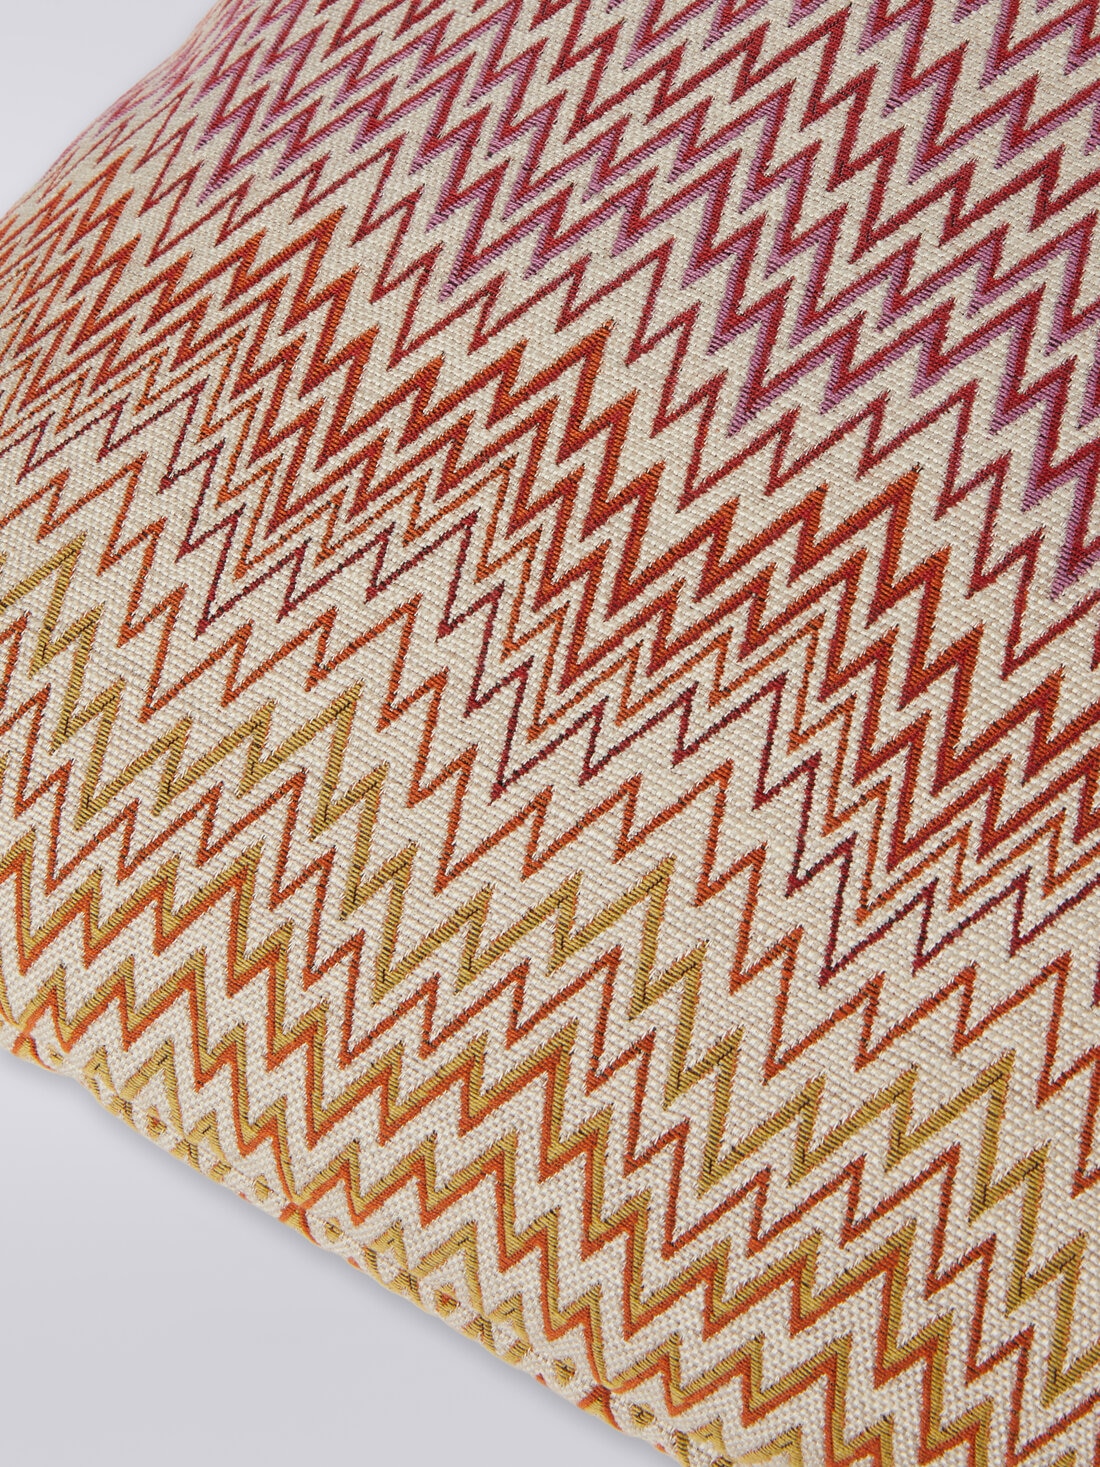 Arras cushion 60x60 cm, Multicoloured  - 8051275499817 - 2